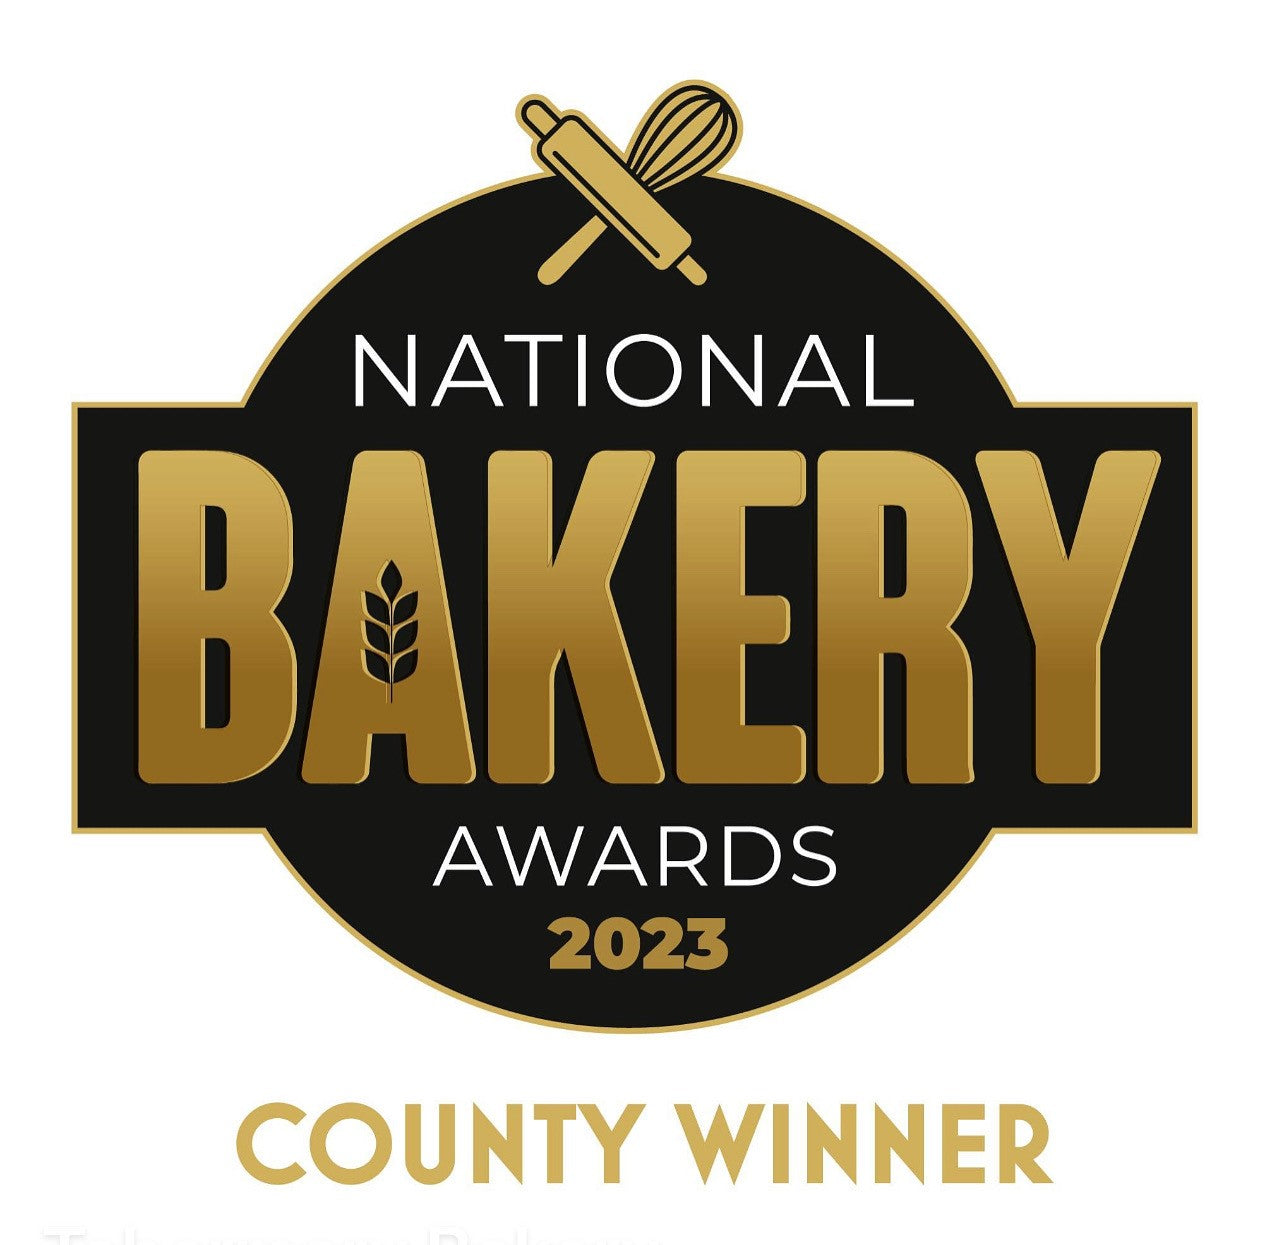 National Bakery Award Winners 2023